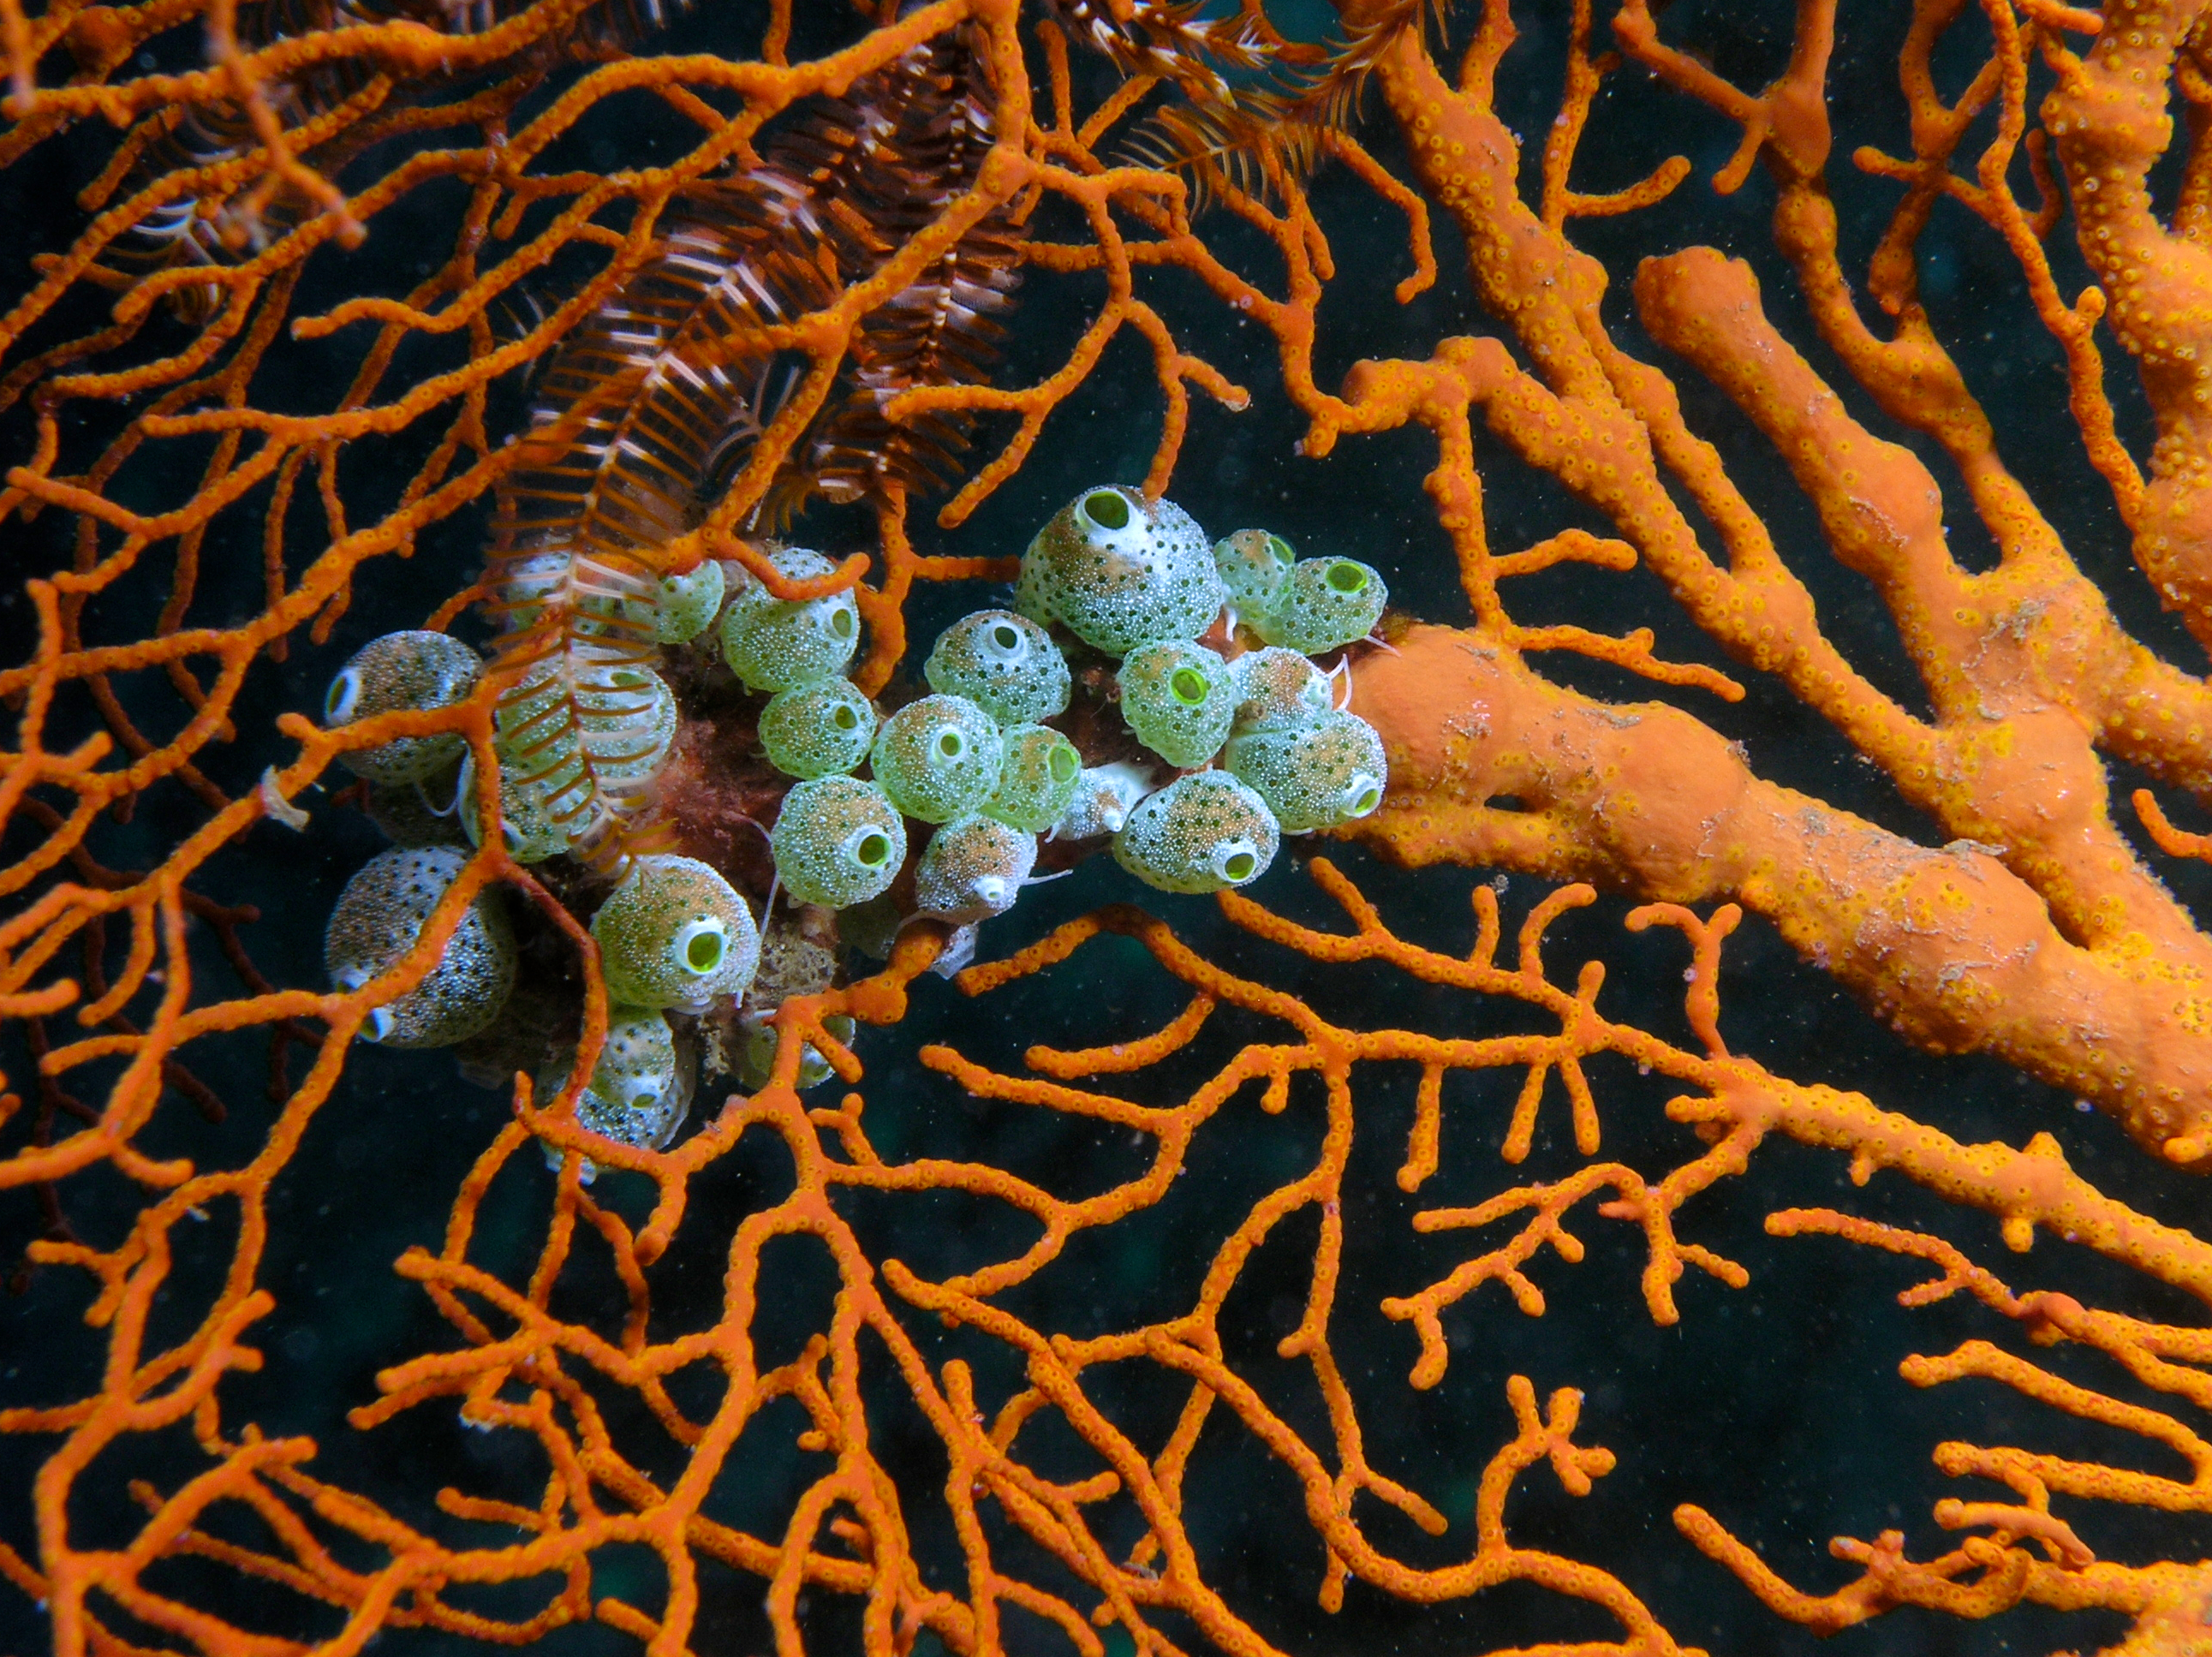 Atriolum robustum (Ascidians) growing on Melithaea sp. (Soft coral)